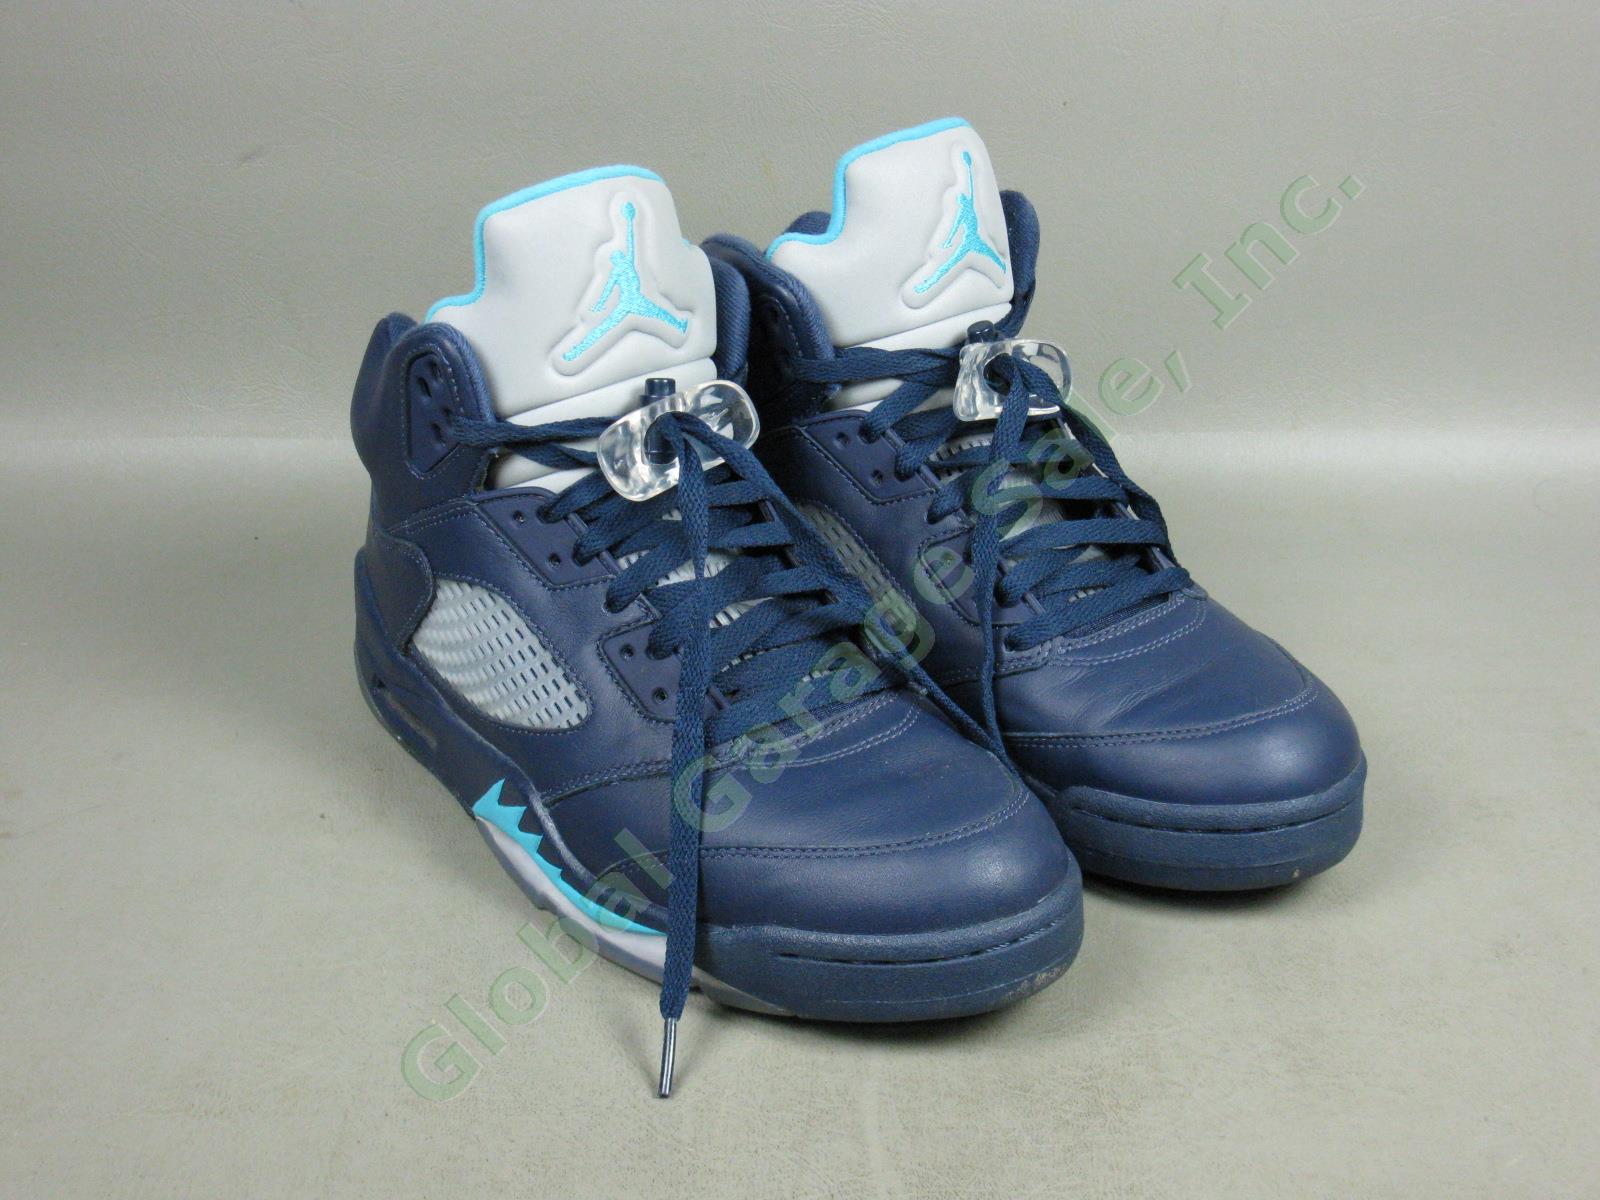 Nike Air Jordan 5 V Retro Hornets Shoes Midnight Navy Blue White 136027-405 Sz 9